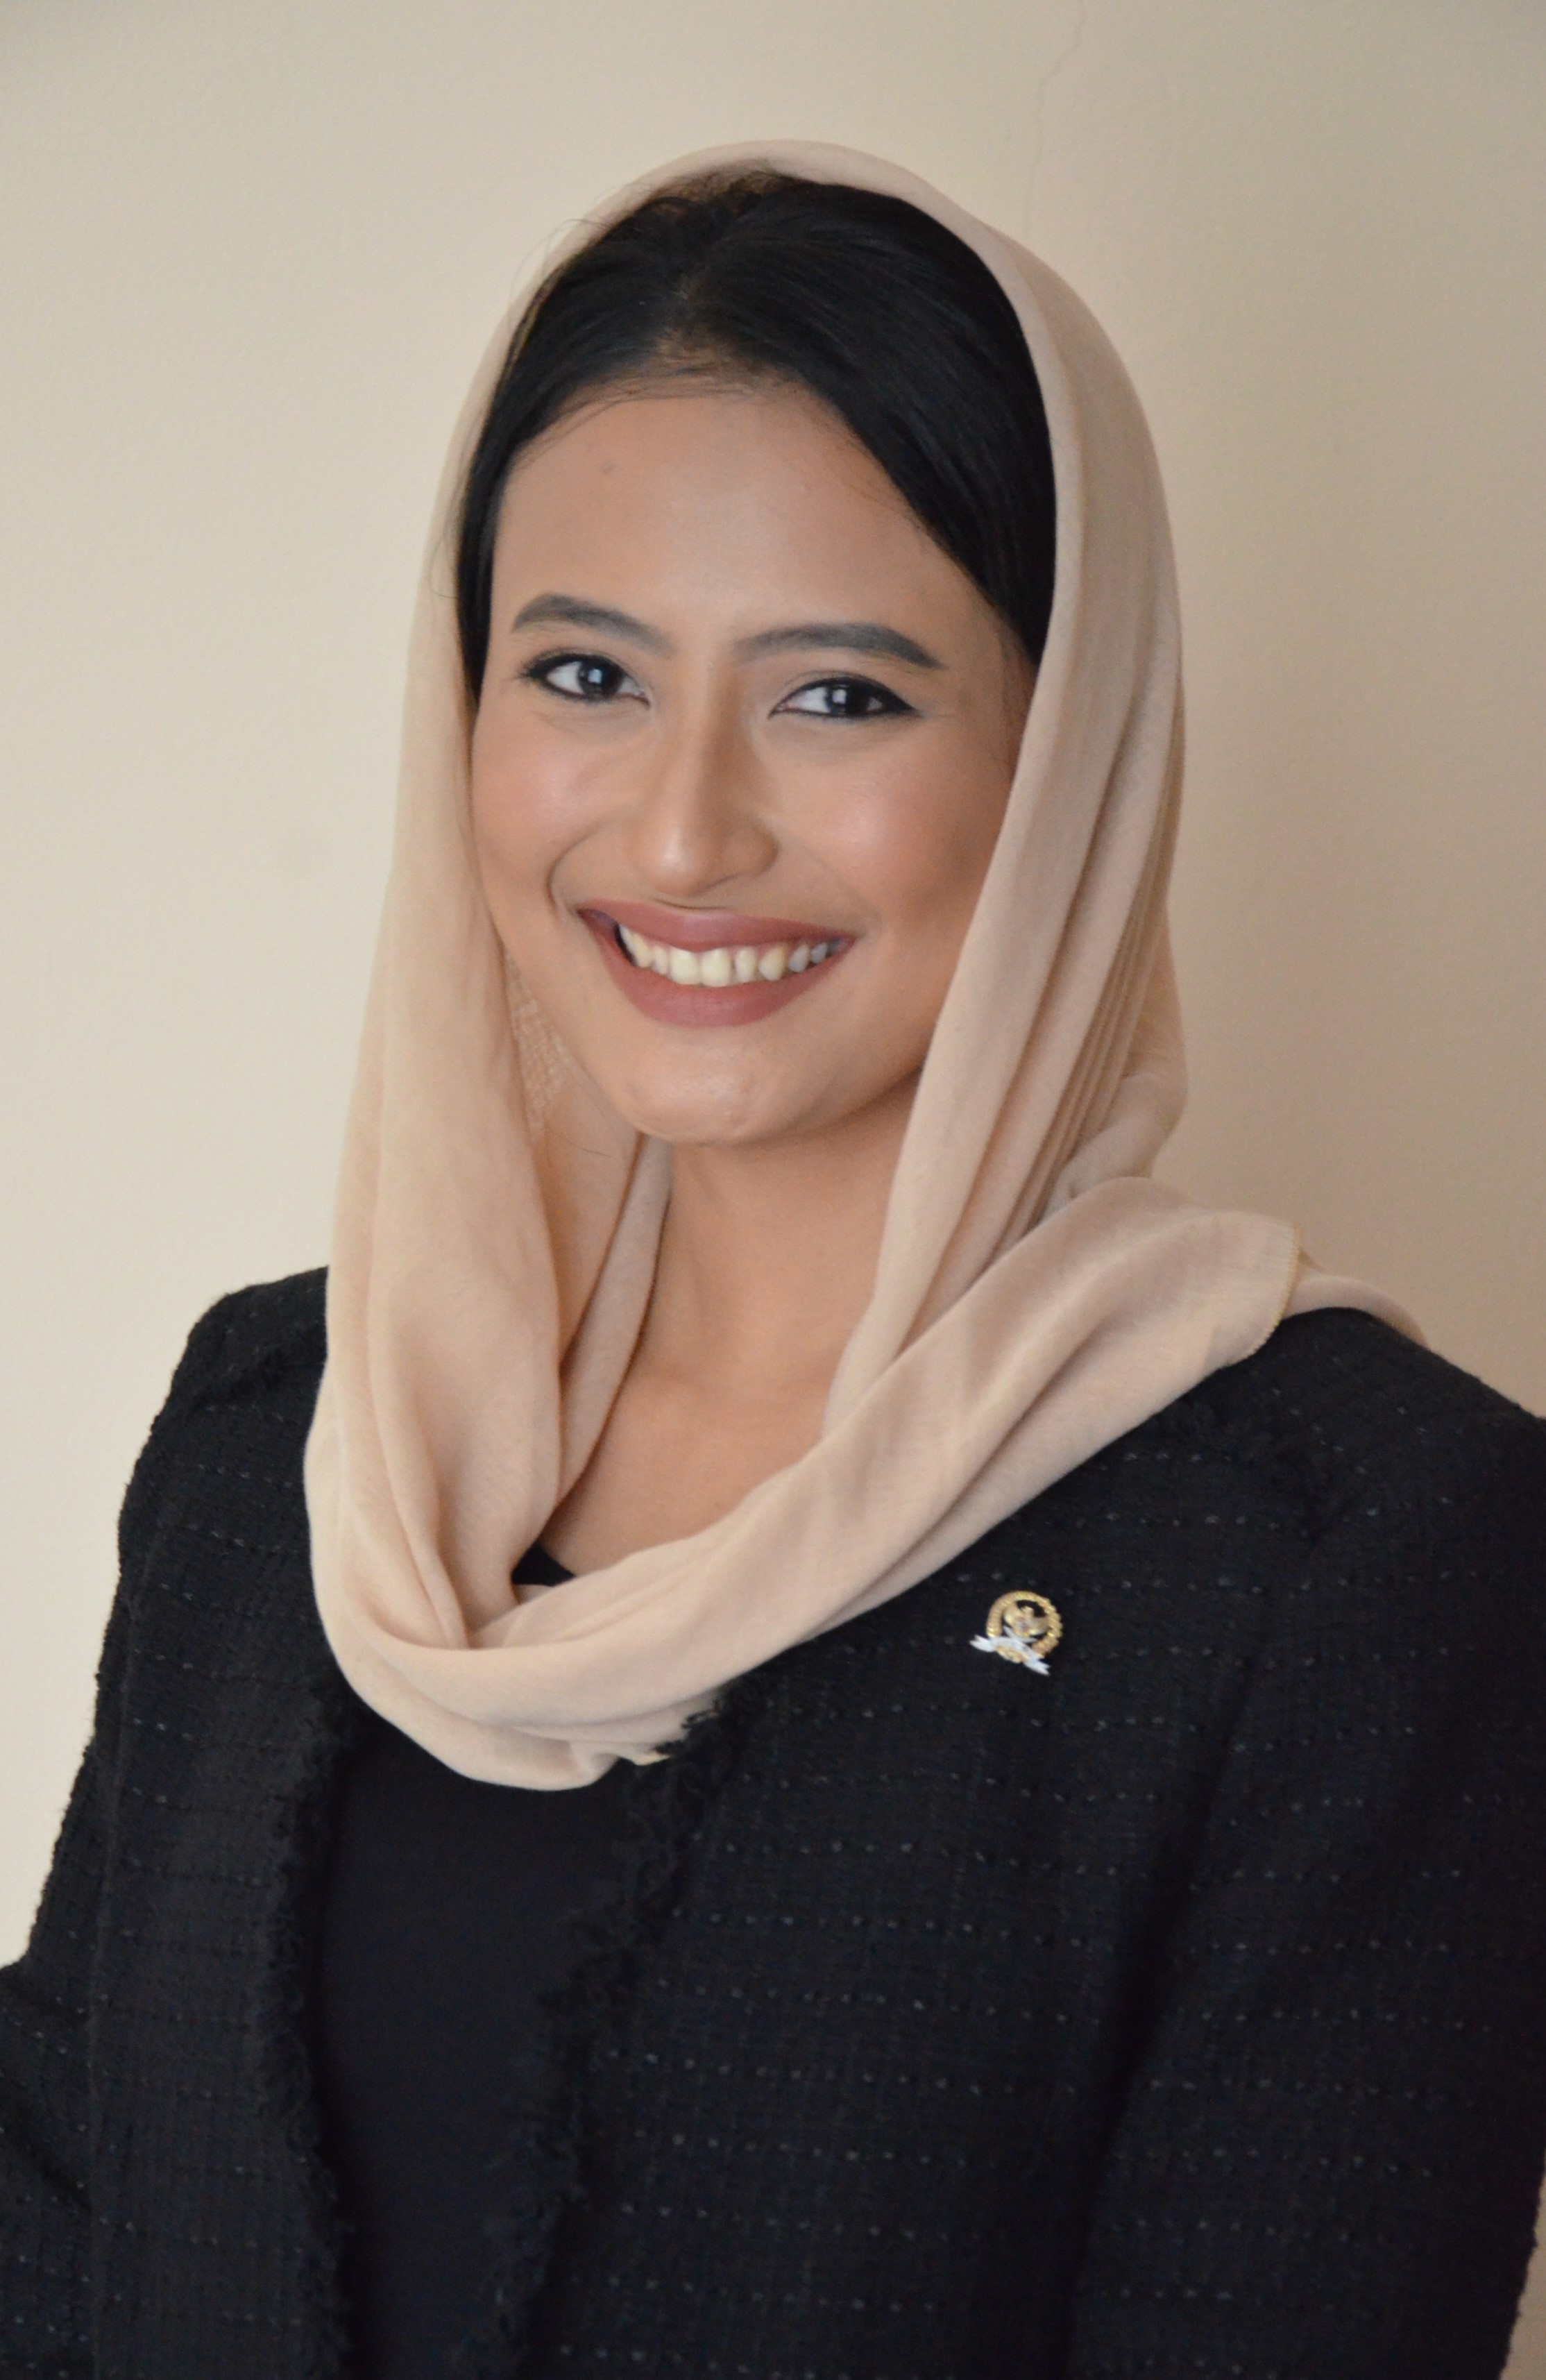 Hijab - Wikipedia